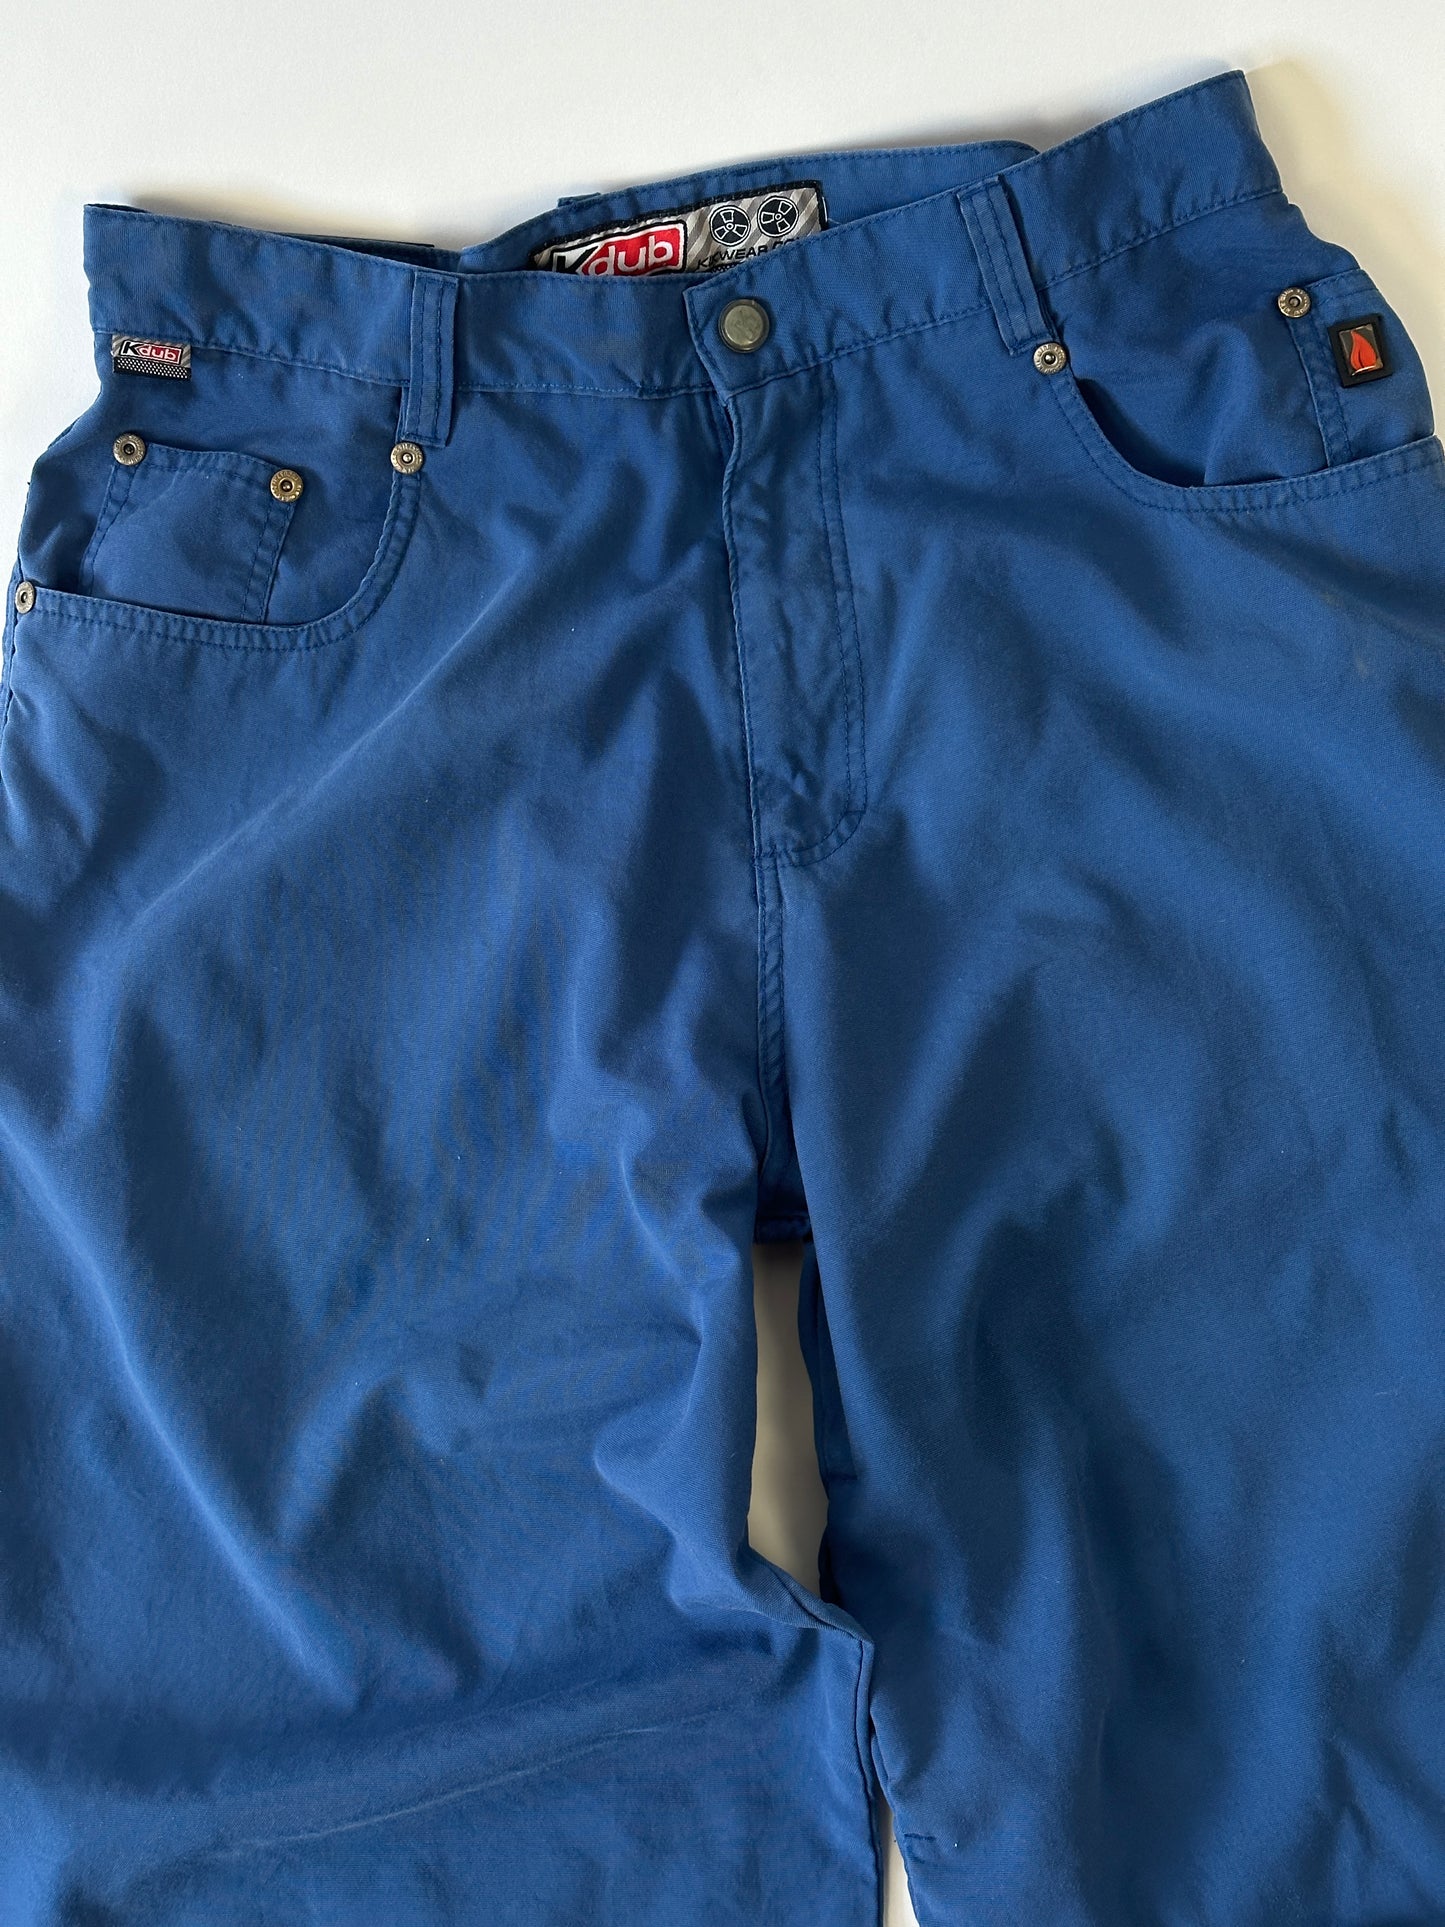 Kdub Kikwear Vintage Raver Baggy Flash Pants - 36